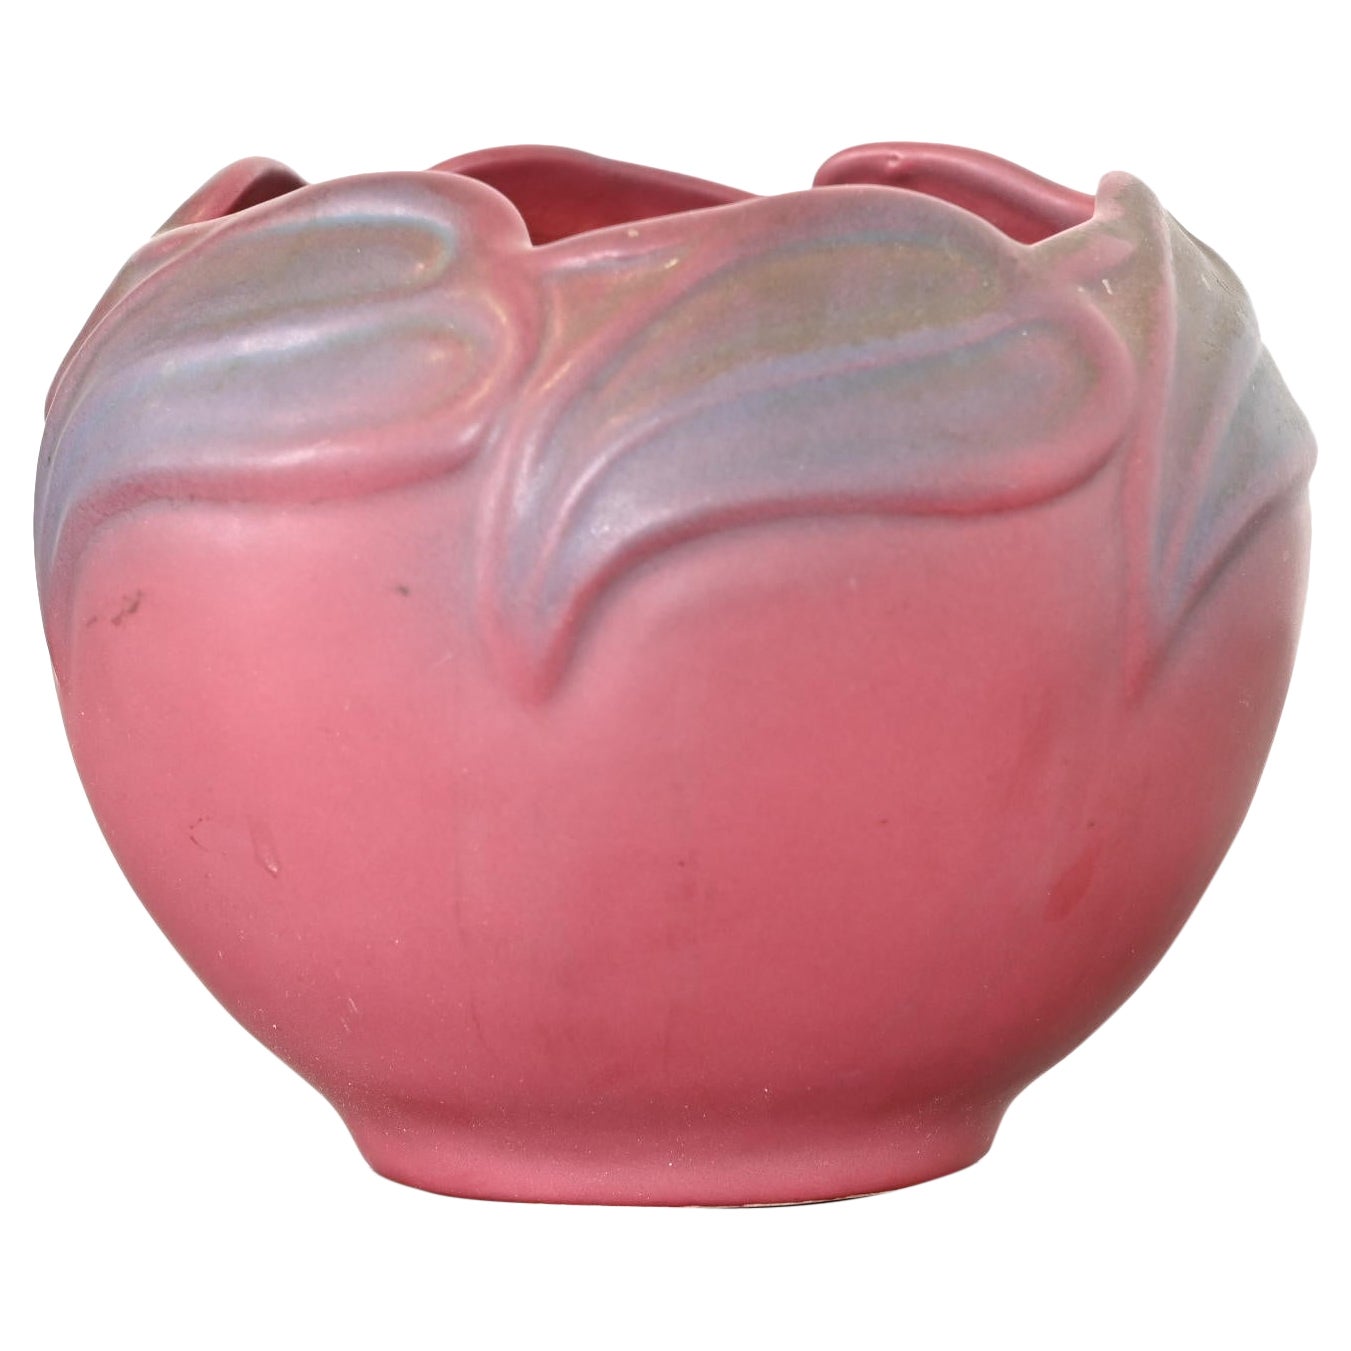 Van Briggle Arts & Crafts Antike geblümte rosa und lavendel glasierte Keramikvase